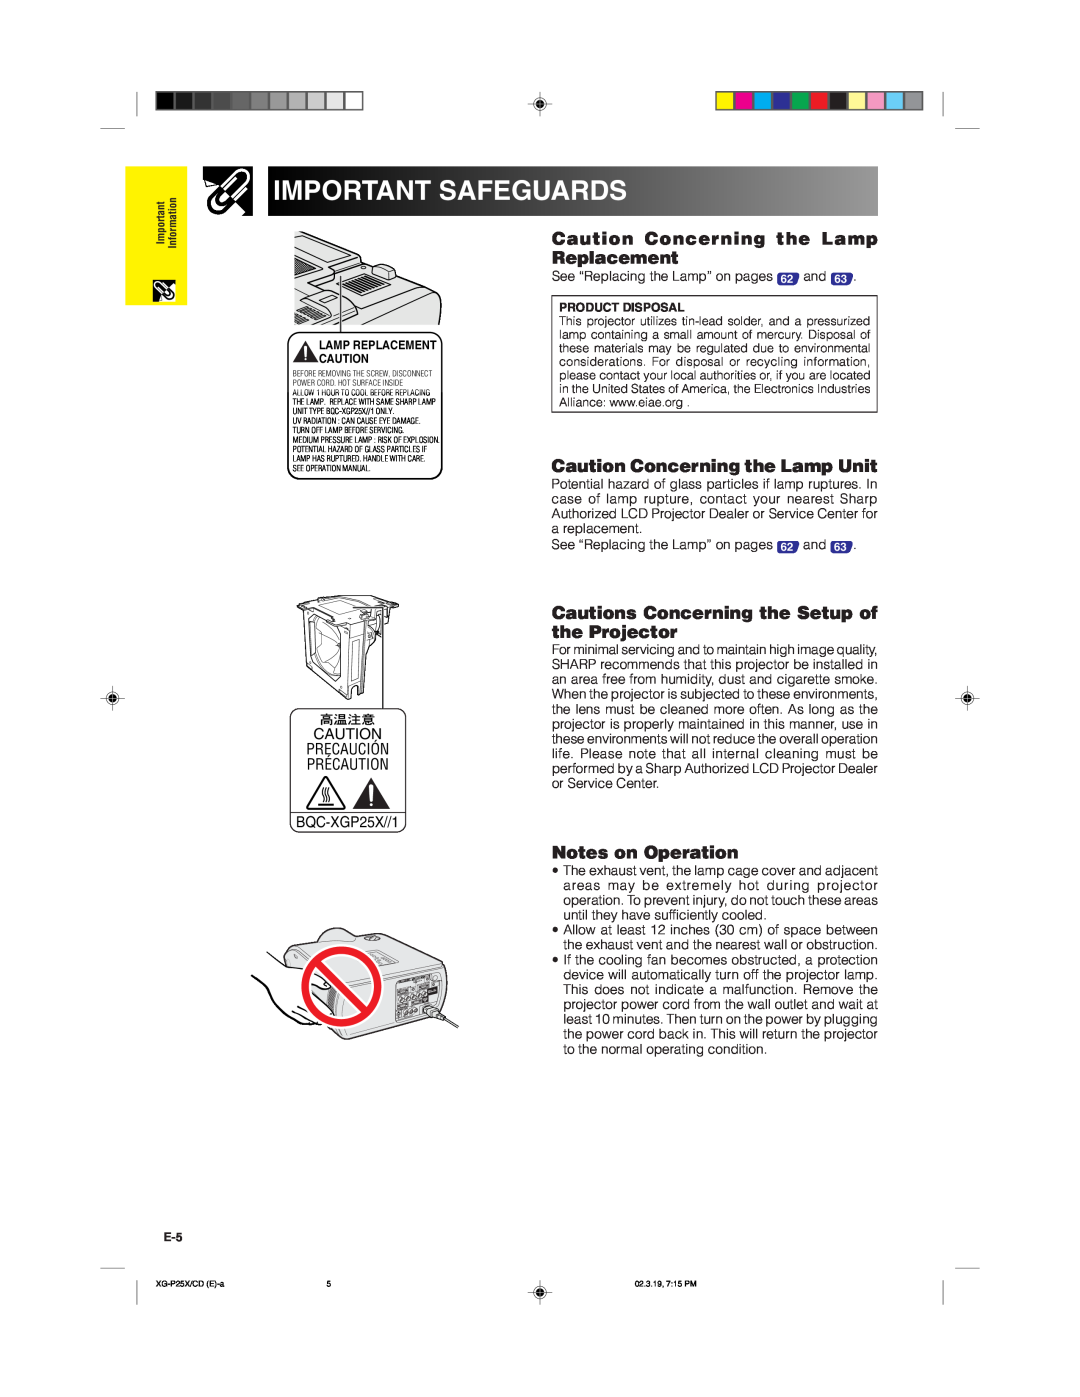 Sharp XG-P25X Caution Concerning the Lamp Unit, Cautions Concerning the Setup of the Projector, Notes on Operation 